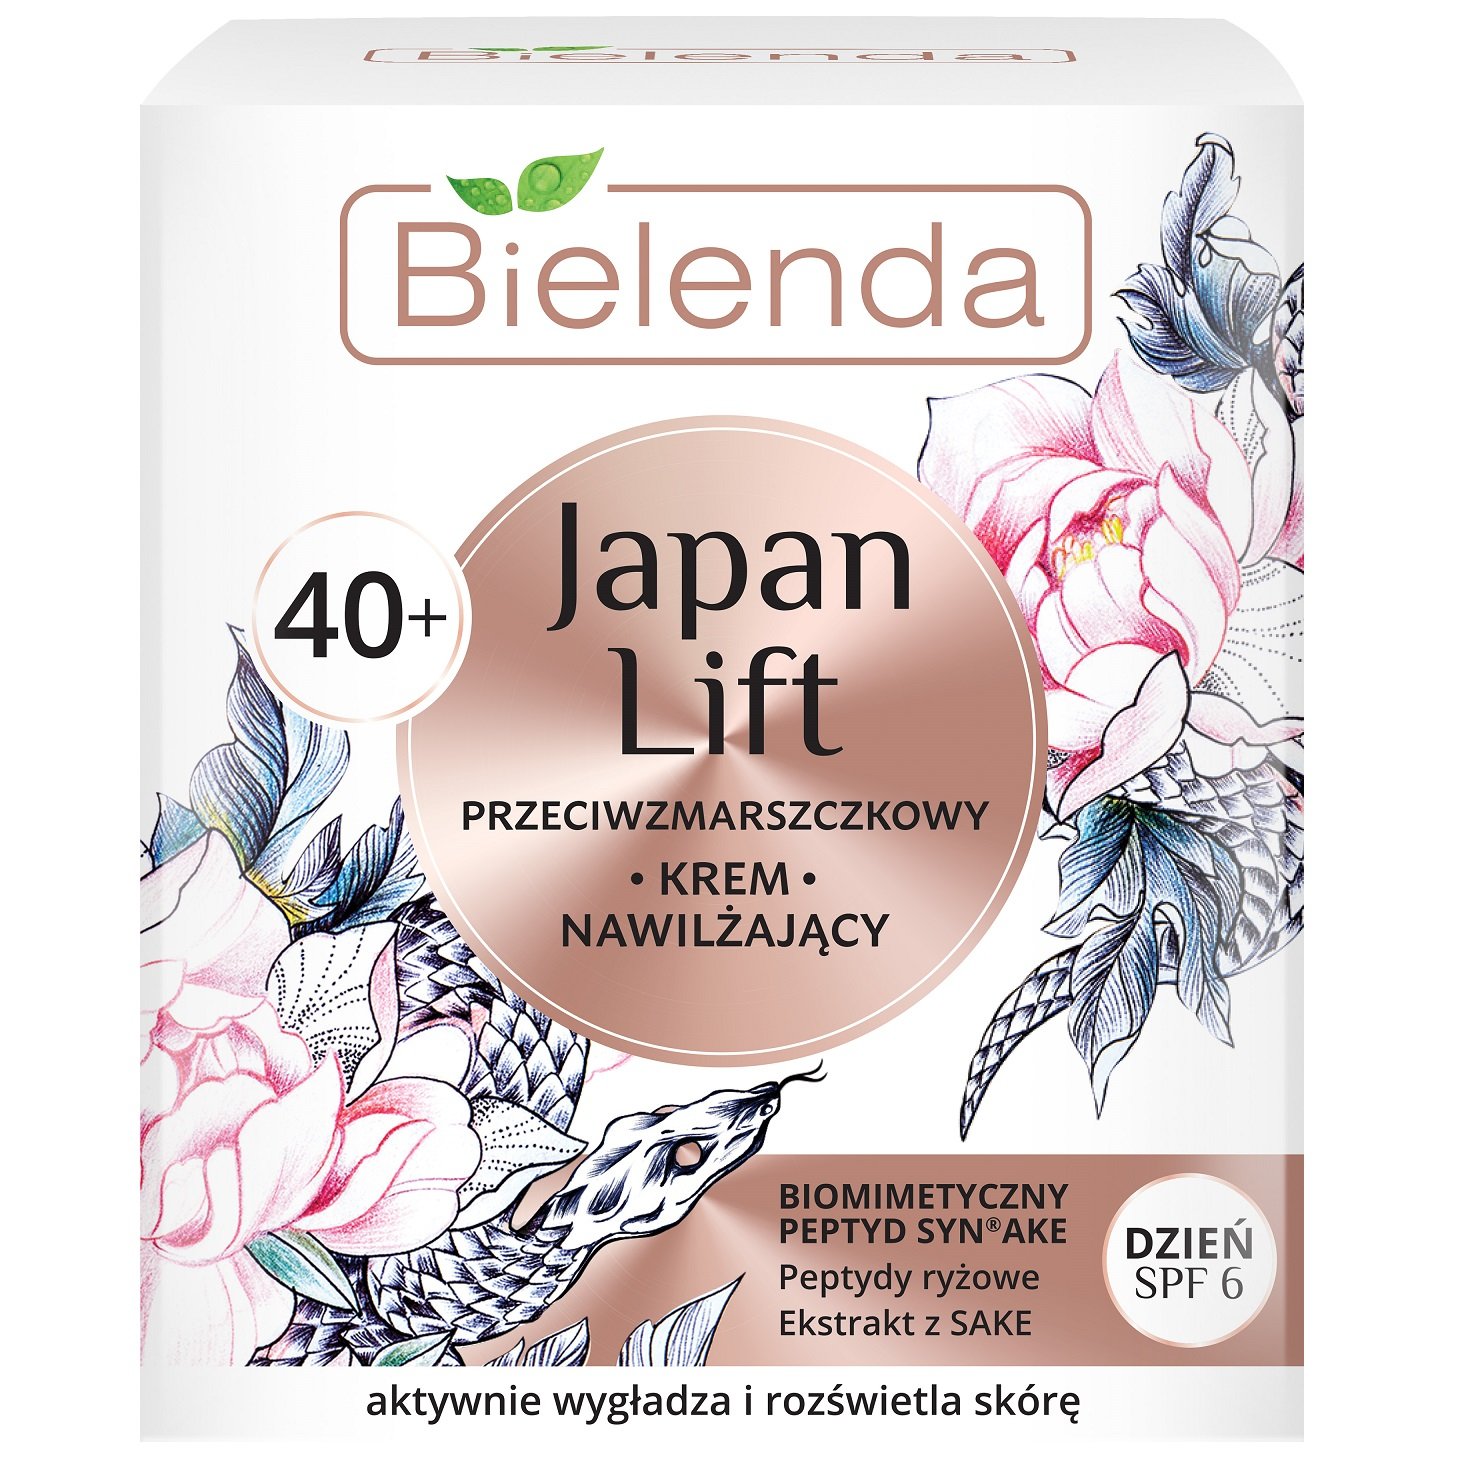 Дневной увлажняющий крем Bielenda Japan Lift против морщин, 40+, SPF 6, 50 мл - фото 1